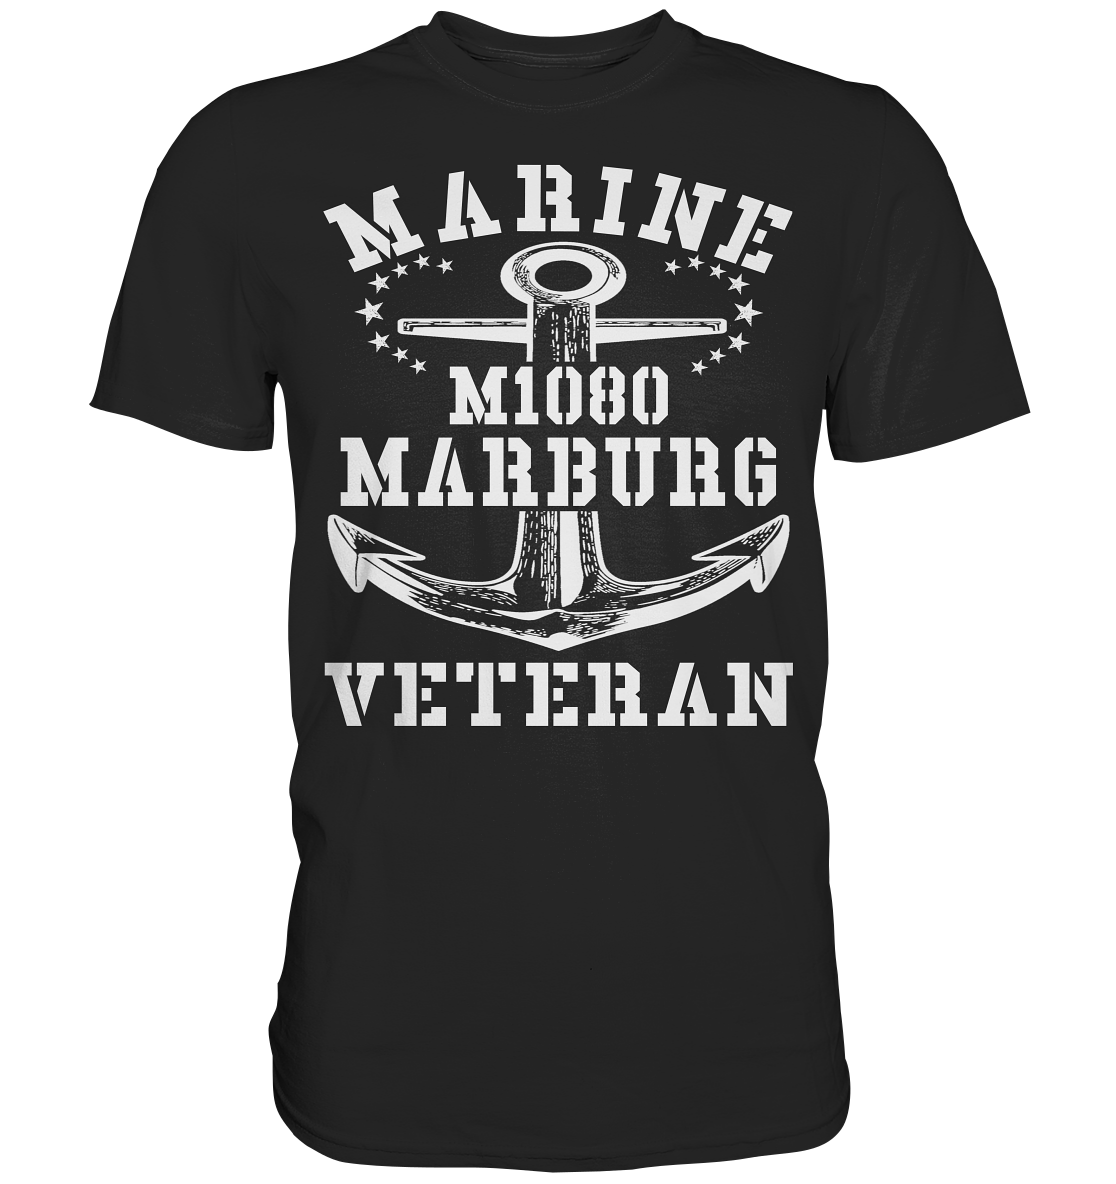 MARINE VETERAN M1080 MARBURG - Premium Shirt